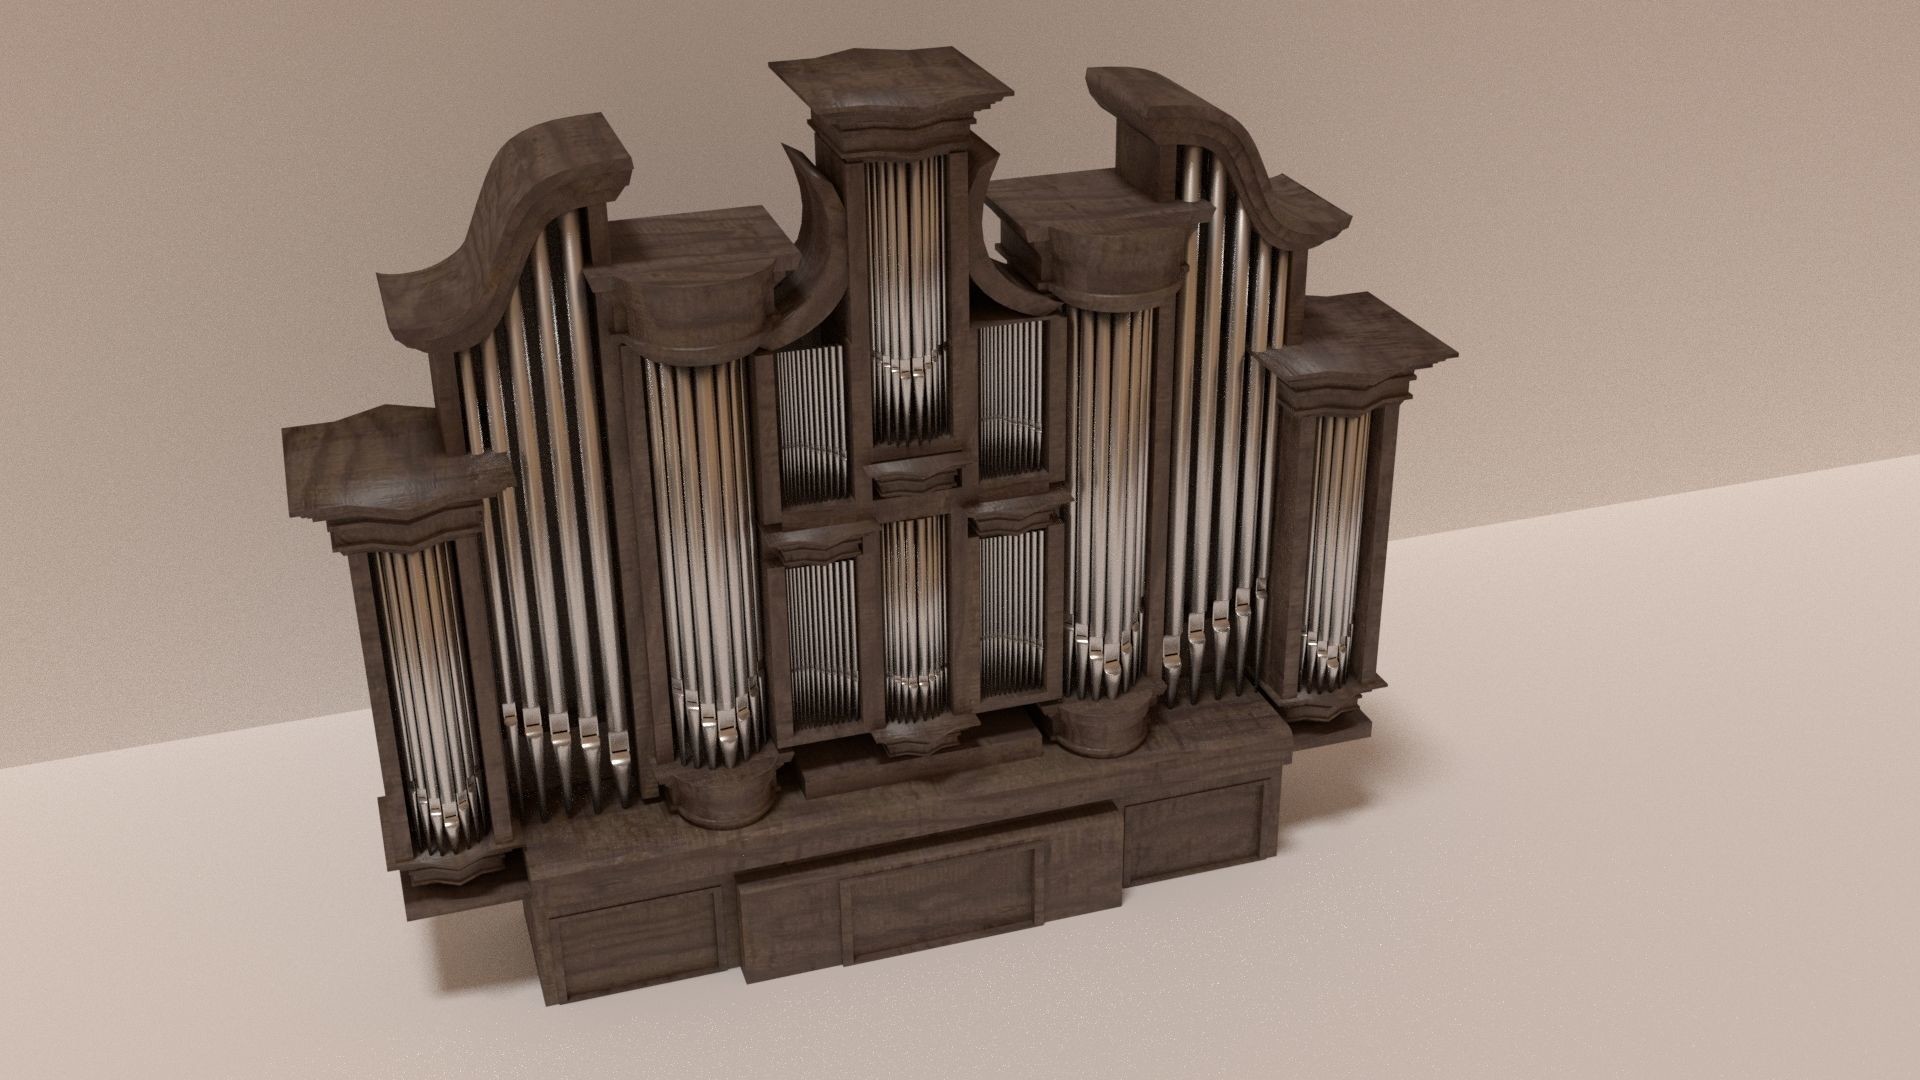 1920x1080 ... pipe organ 3d model obj 3ds fbx blend dae mtl 4 ...